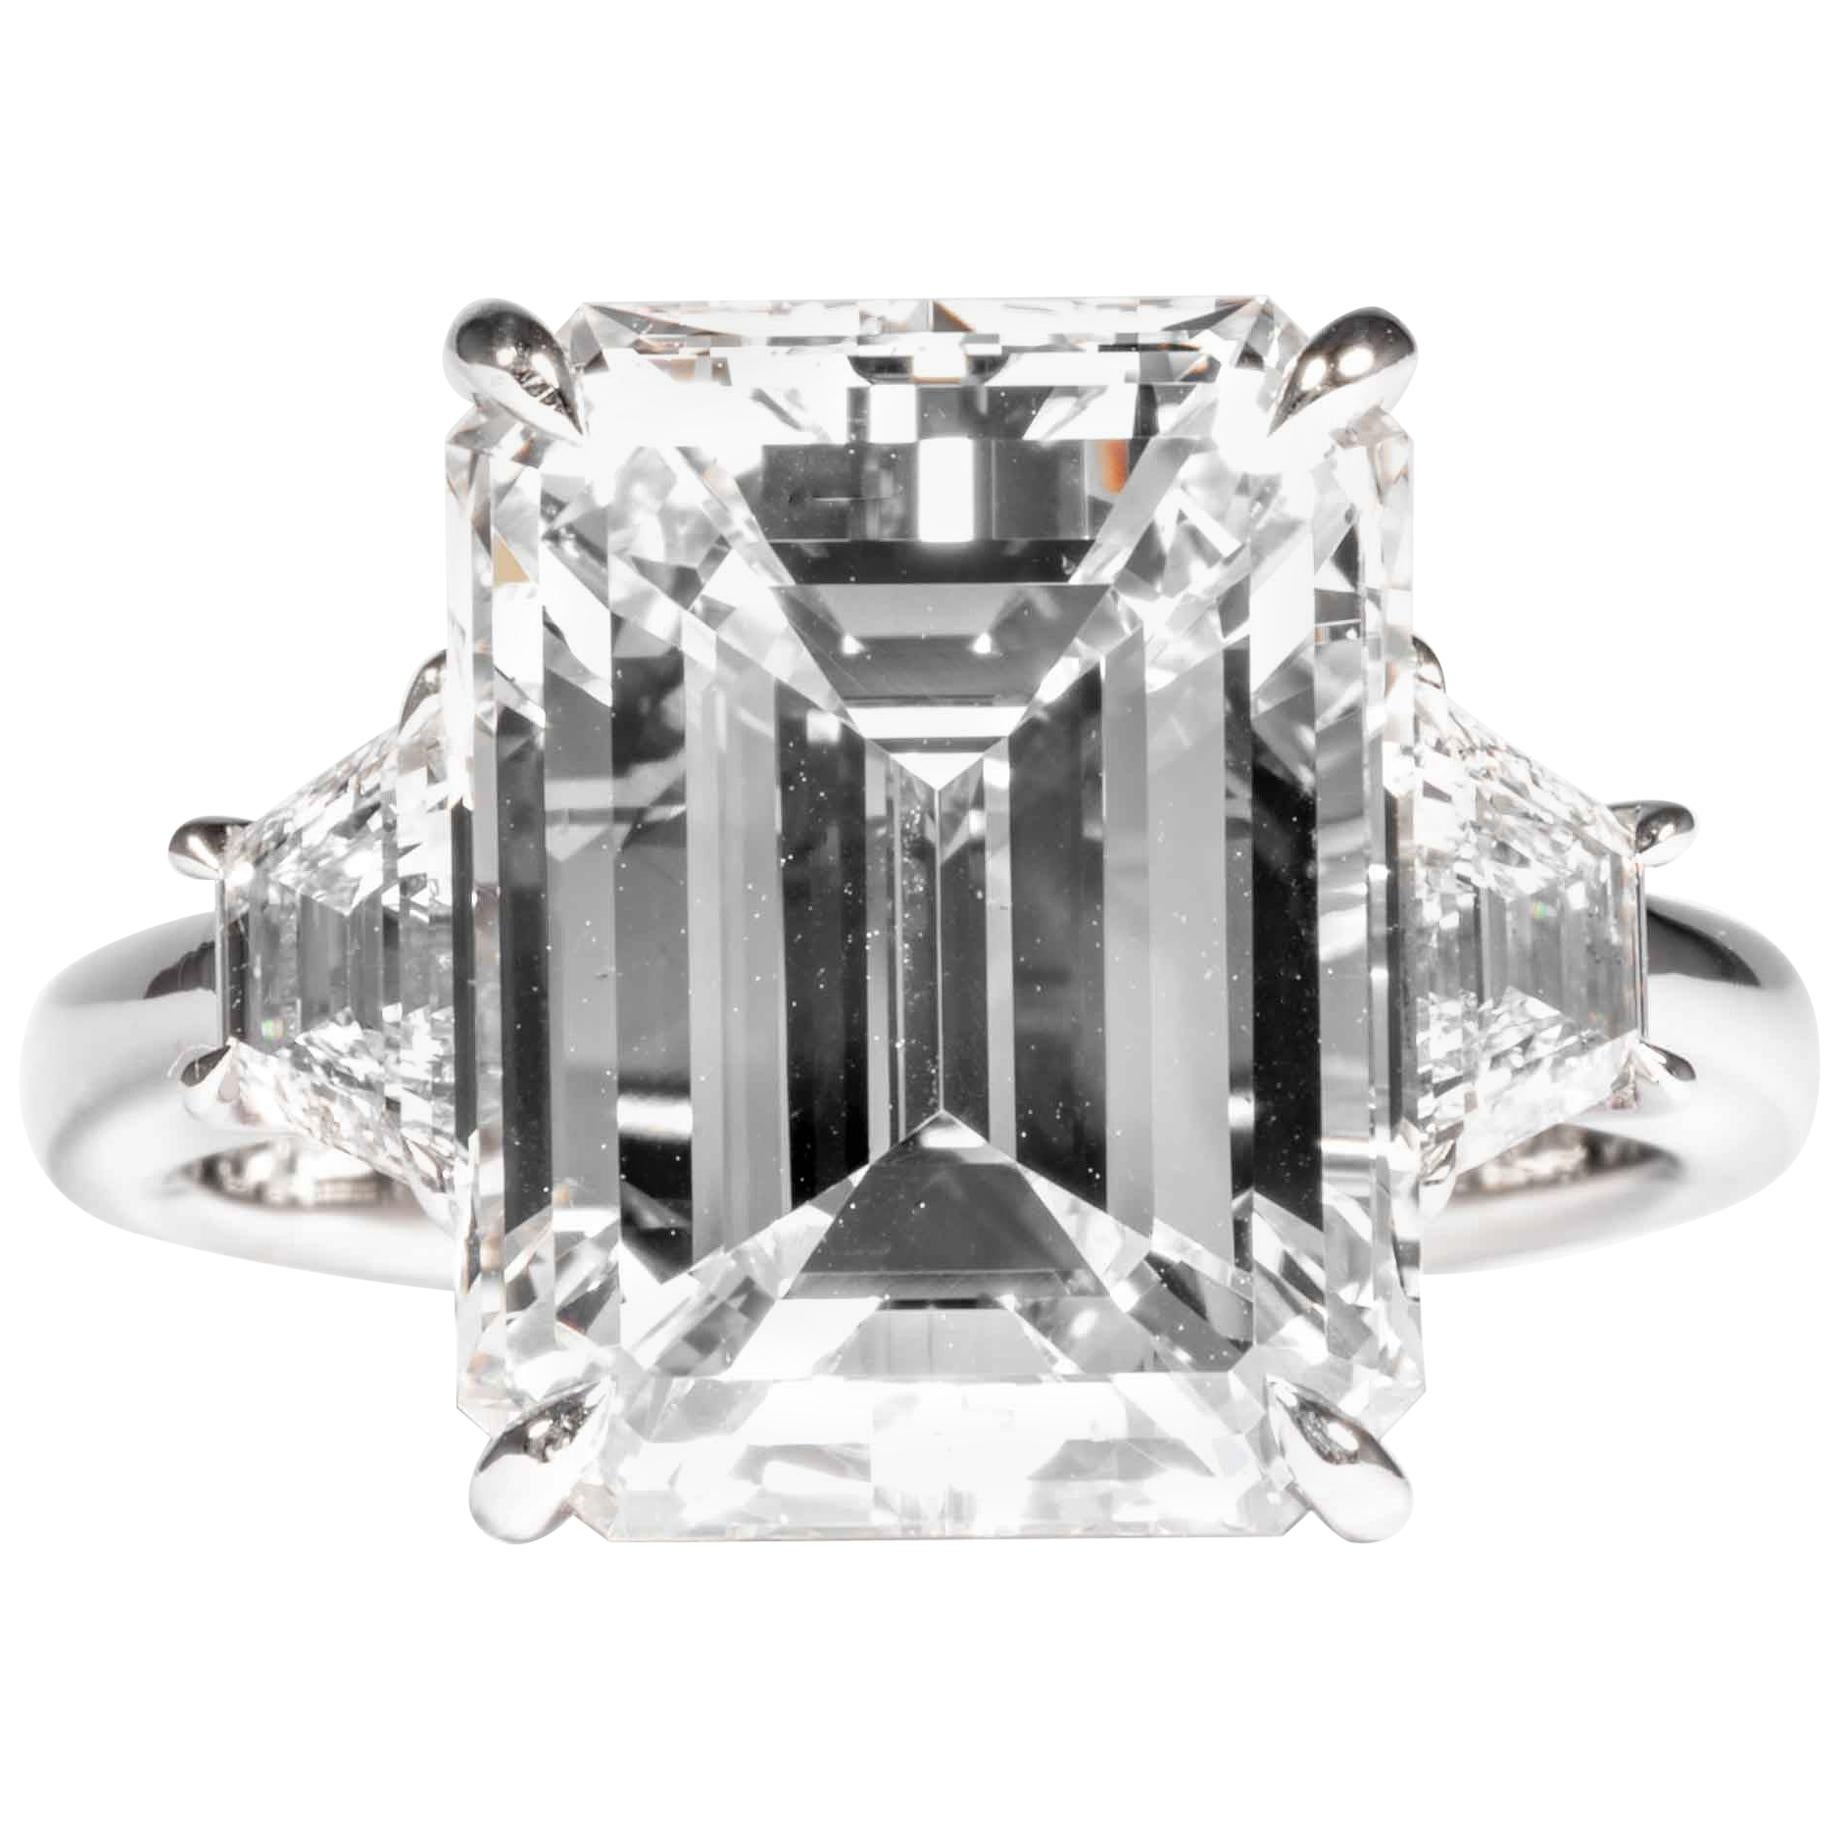 Shreve, Crump & Low GIA Certified 8.97 Carat G VS2 Emerald Cut Diamond Ring